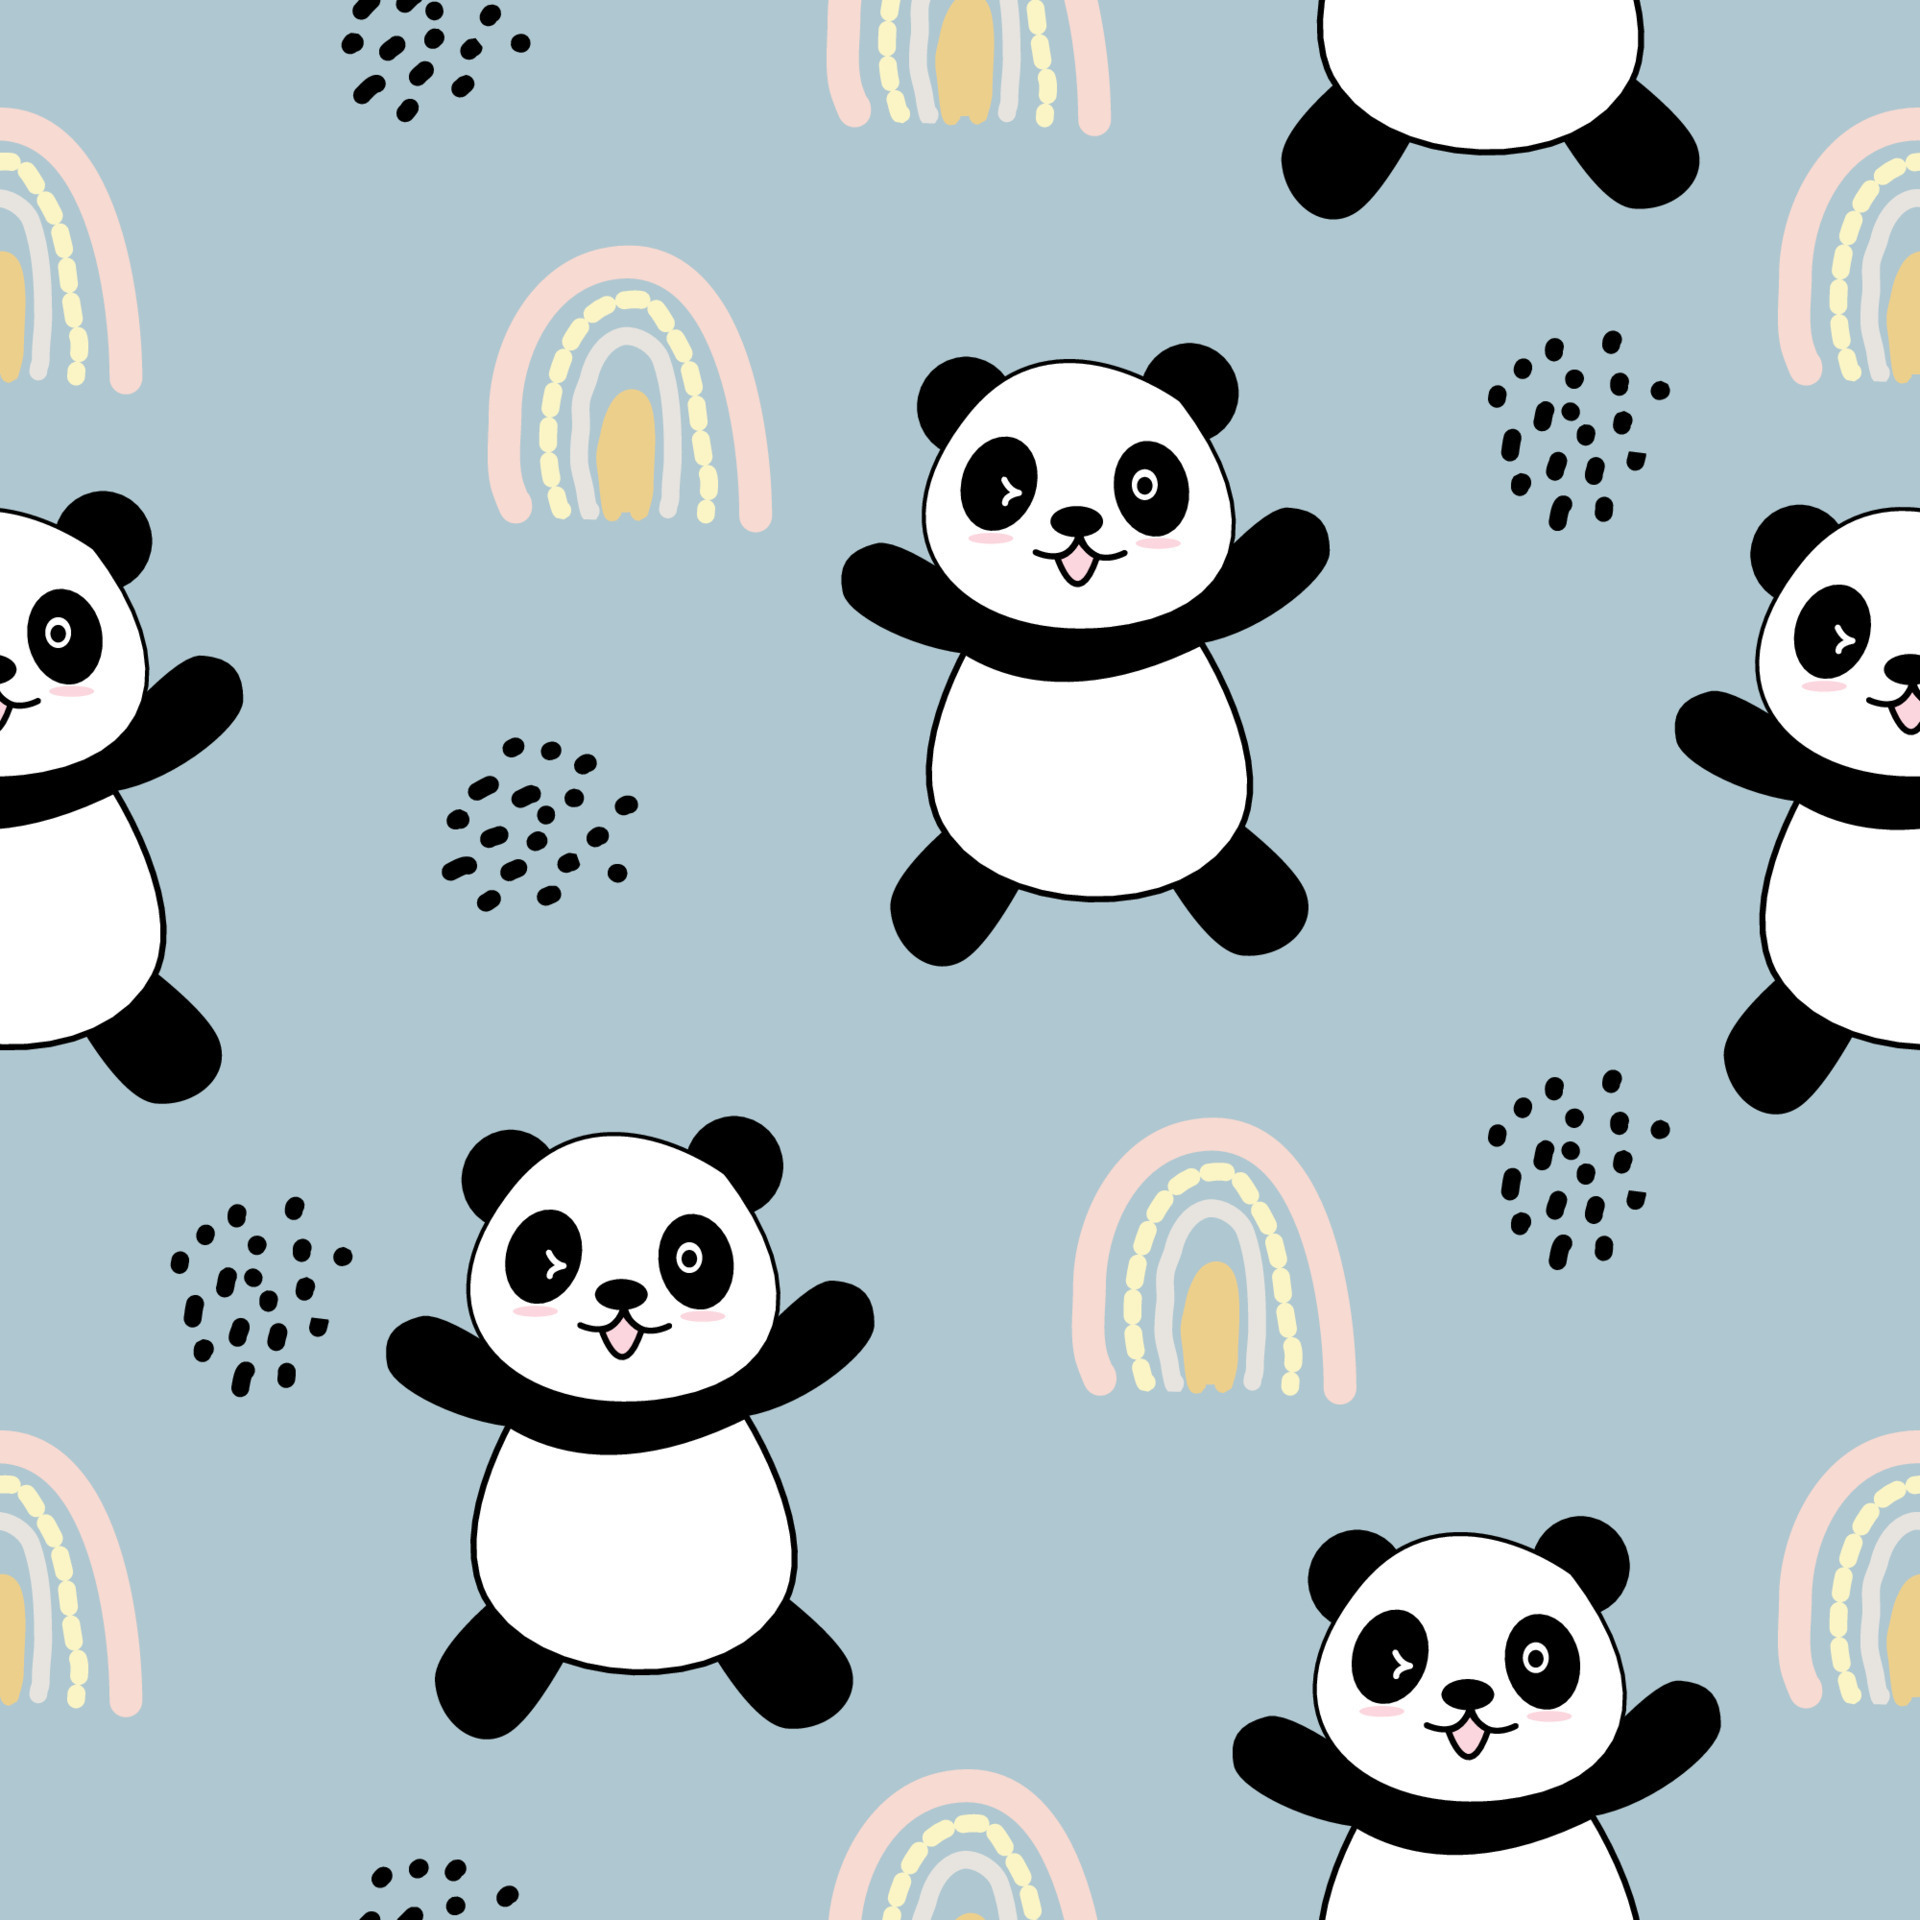 Cute Panda Seamless Pattern Background, Cartoon Panda Bears Vector  illustration, Creative kids for fabric, wrapping, textile, wallpaper,  apparel. 7888292 Vector Art at Vecteezy